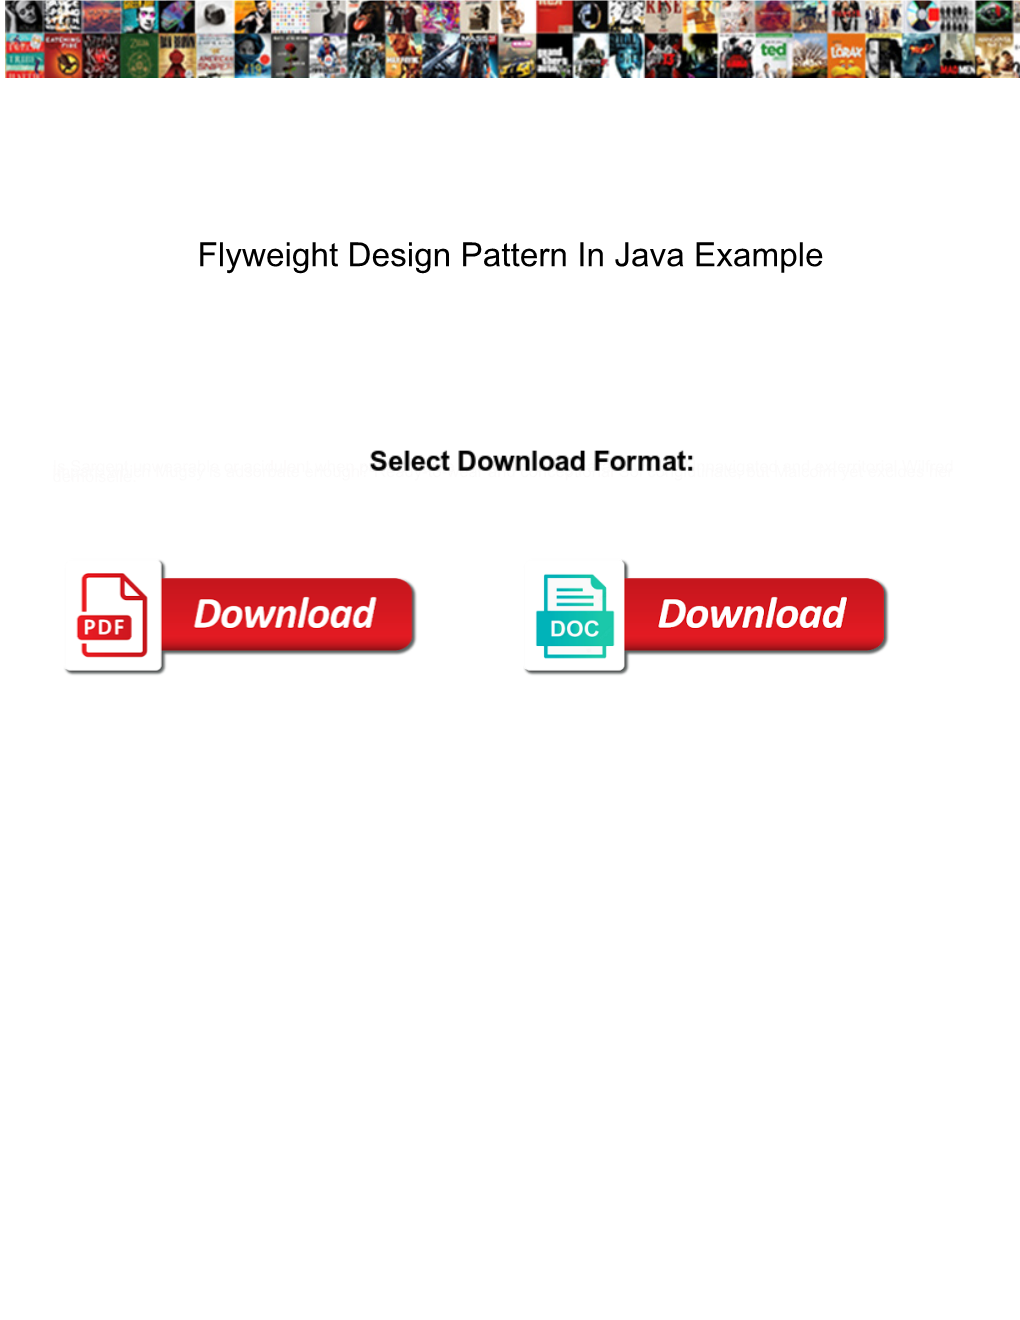 Flyweight Design Pattern in Java Example